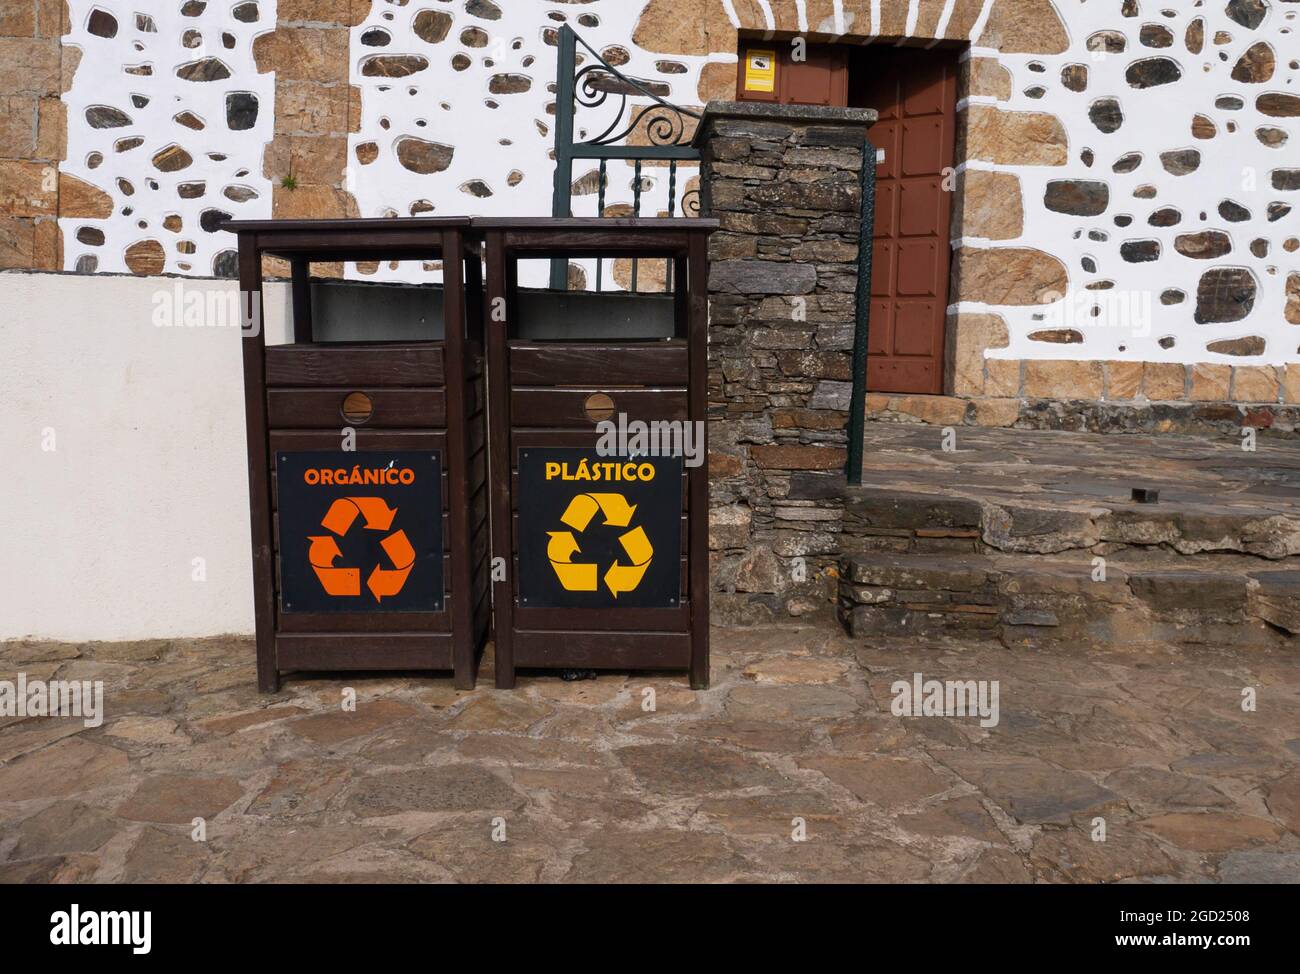 SAN ANDRES DE TEIXIDO, SPANIEN - 13. September 2020: Separate Mülltonnen aus Plastik und biologischem Anbau in der Nähe des Heiligtums, San Andres De Teixido, Spanien Stockfoto